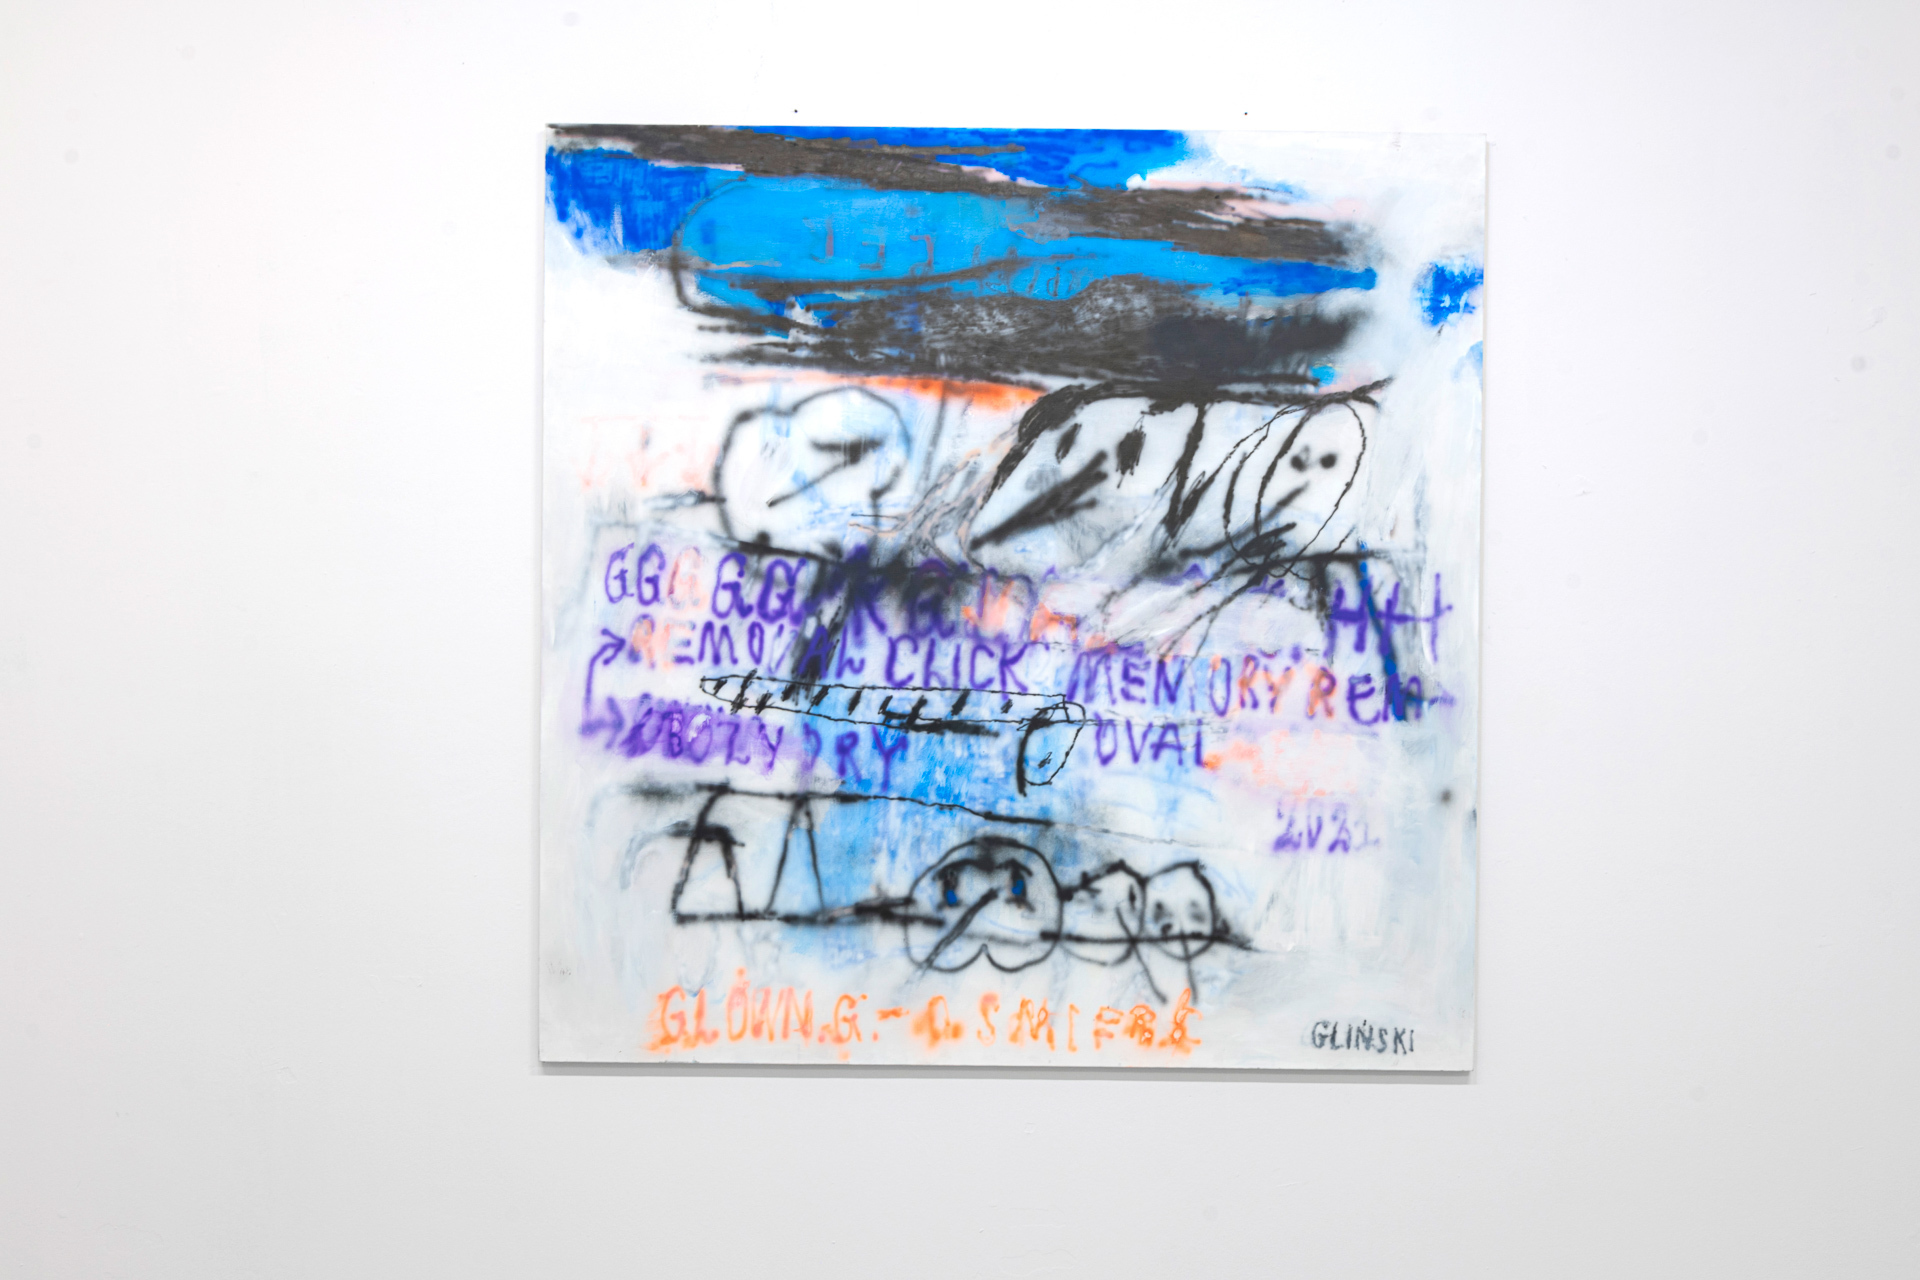 Jakub Glinski - Memory Removal 003, 2022, acrylic on canvas, 150 x 150 cm